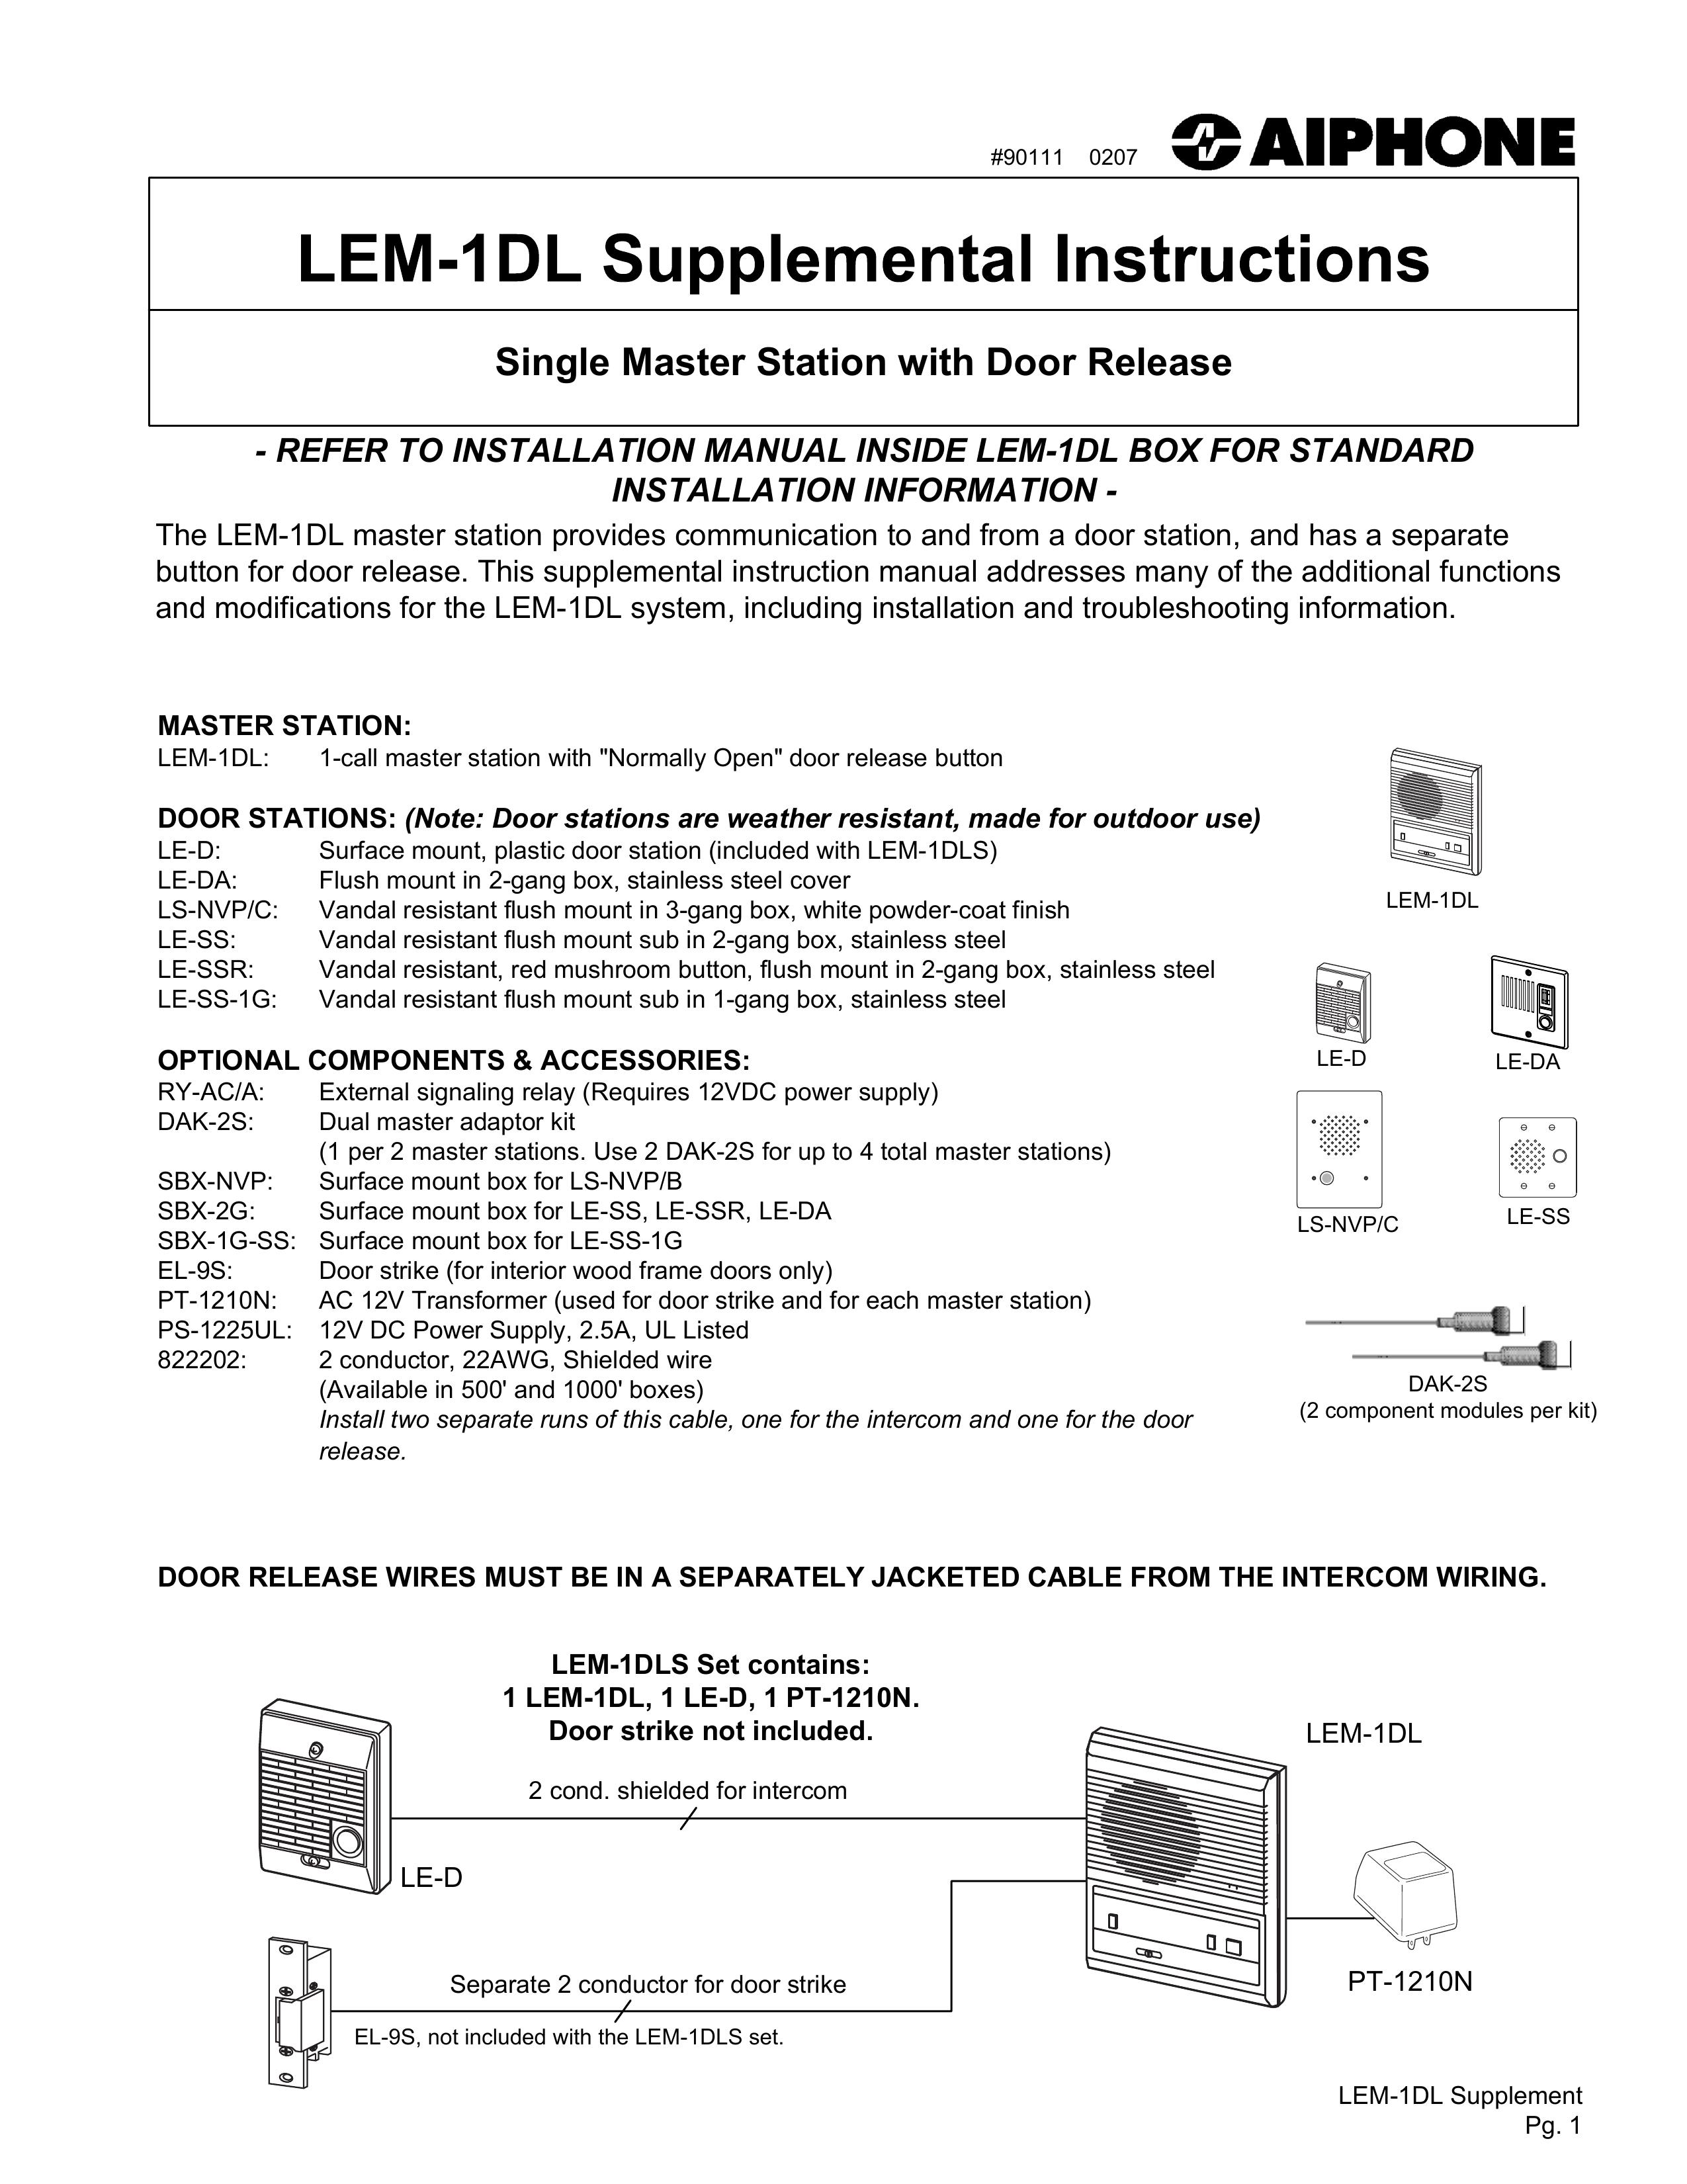 Aiphone LEM-1DL Weather Radio User Manual